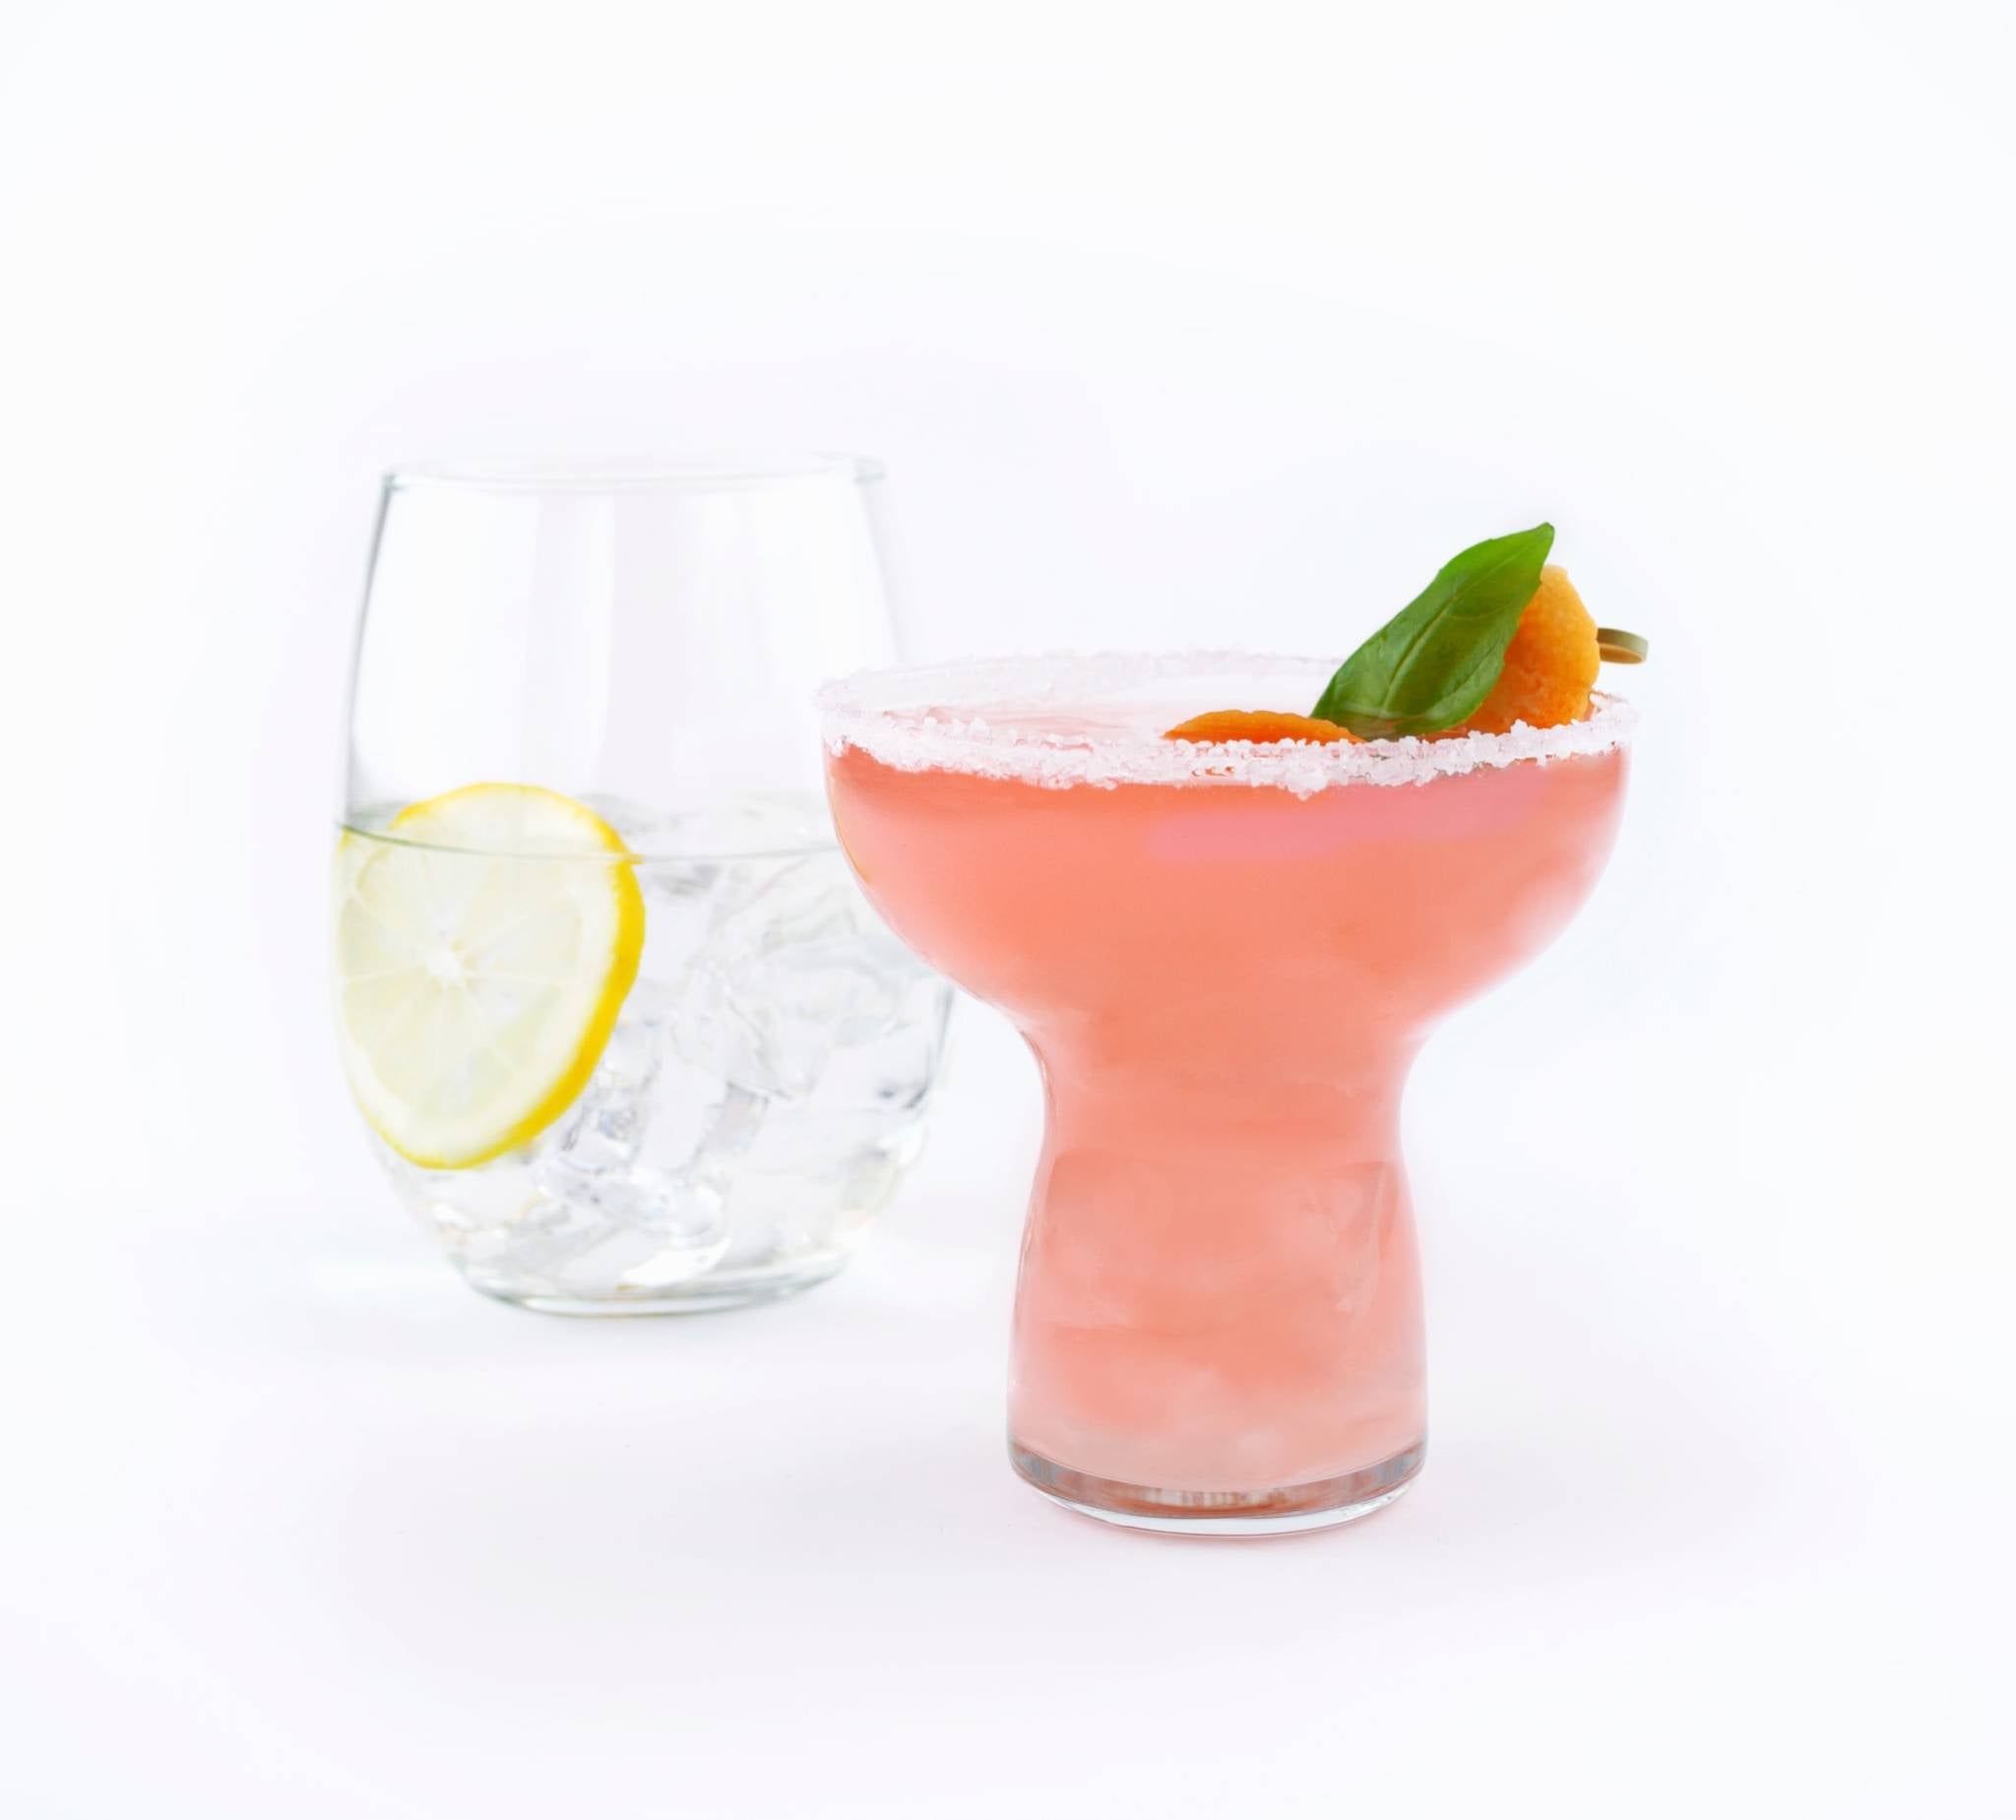 Libbey Symbio 15 oz. Customizable Cocktail Glass - 12/Case